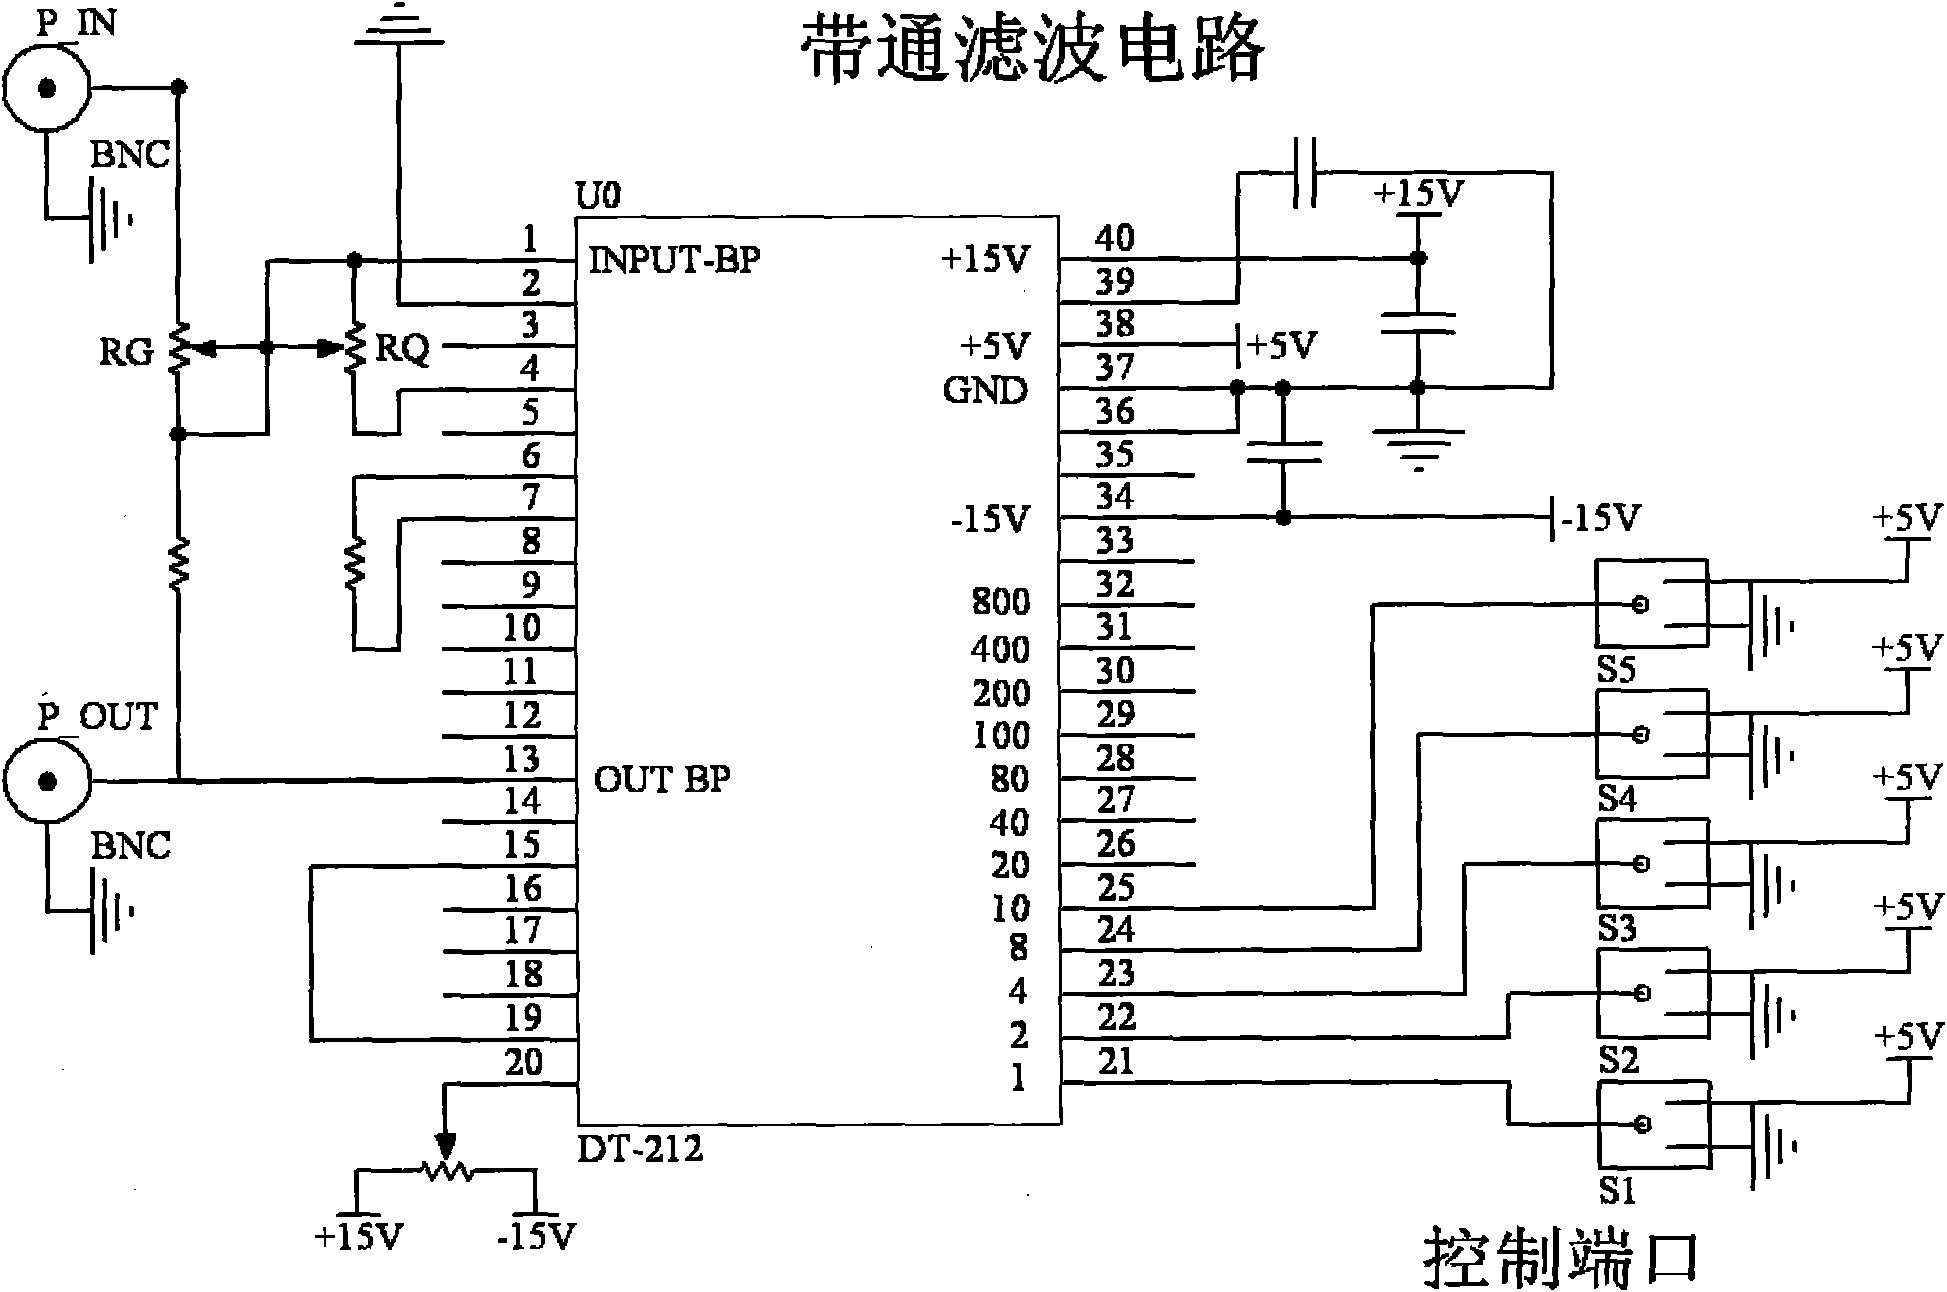 Lock-in amplifier circuit for detecting terahertz pulse signals